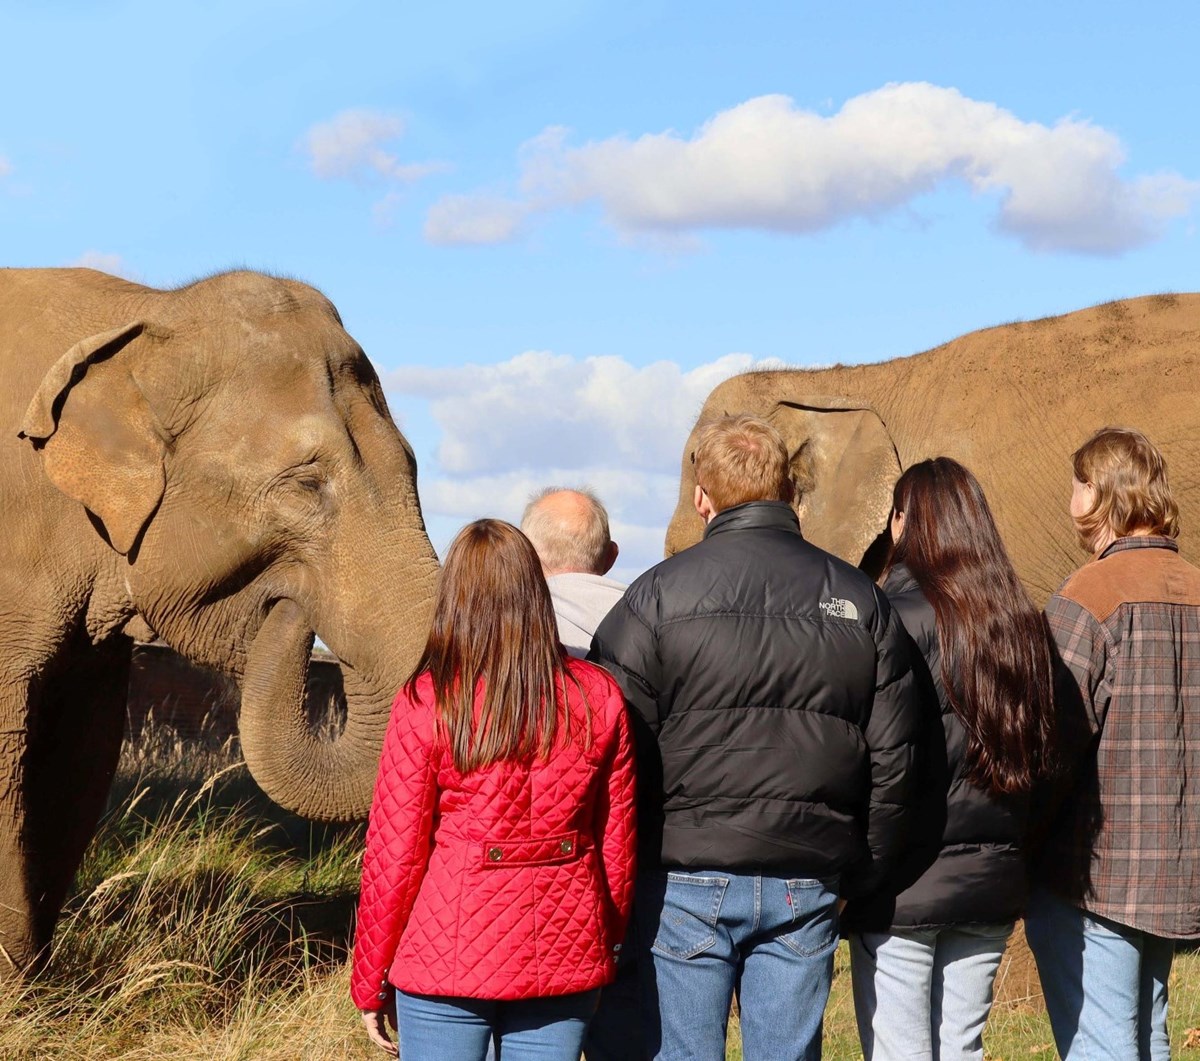 Elephant Encounter image showing visitors looking at elephants